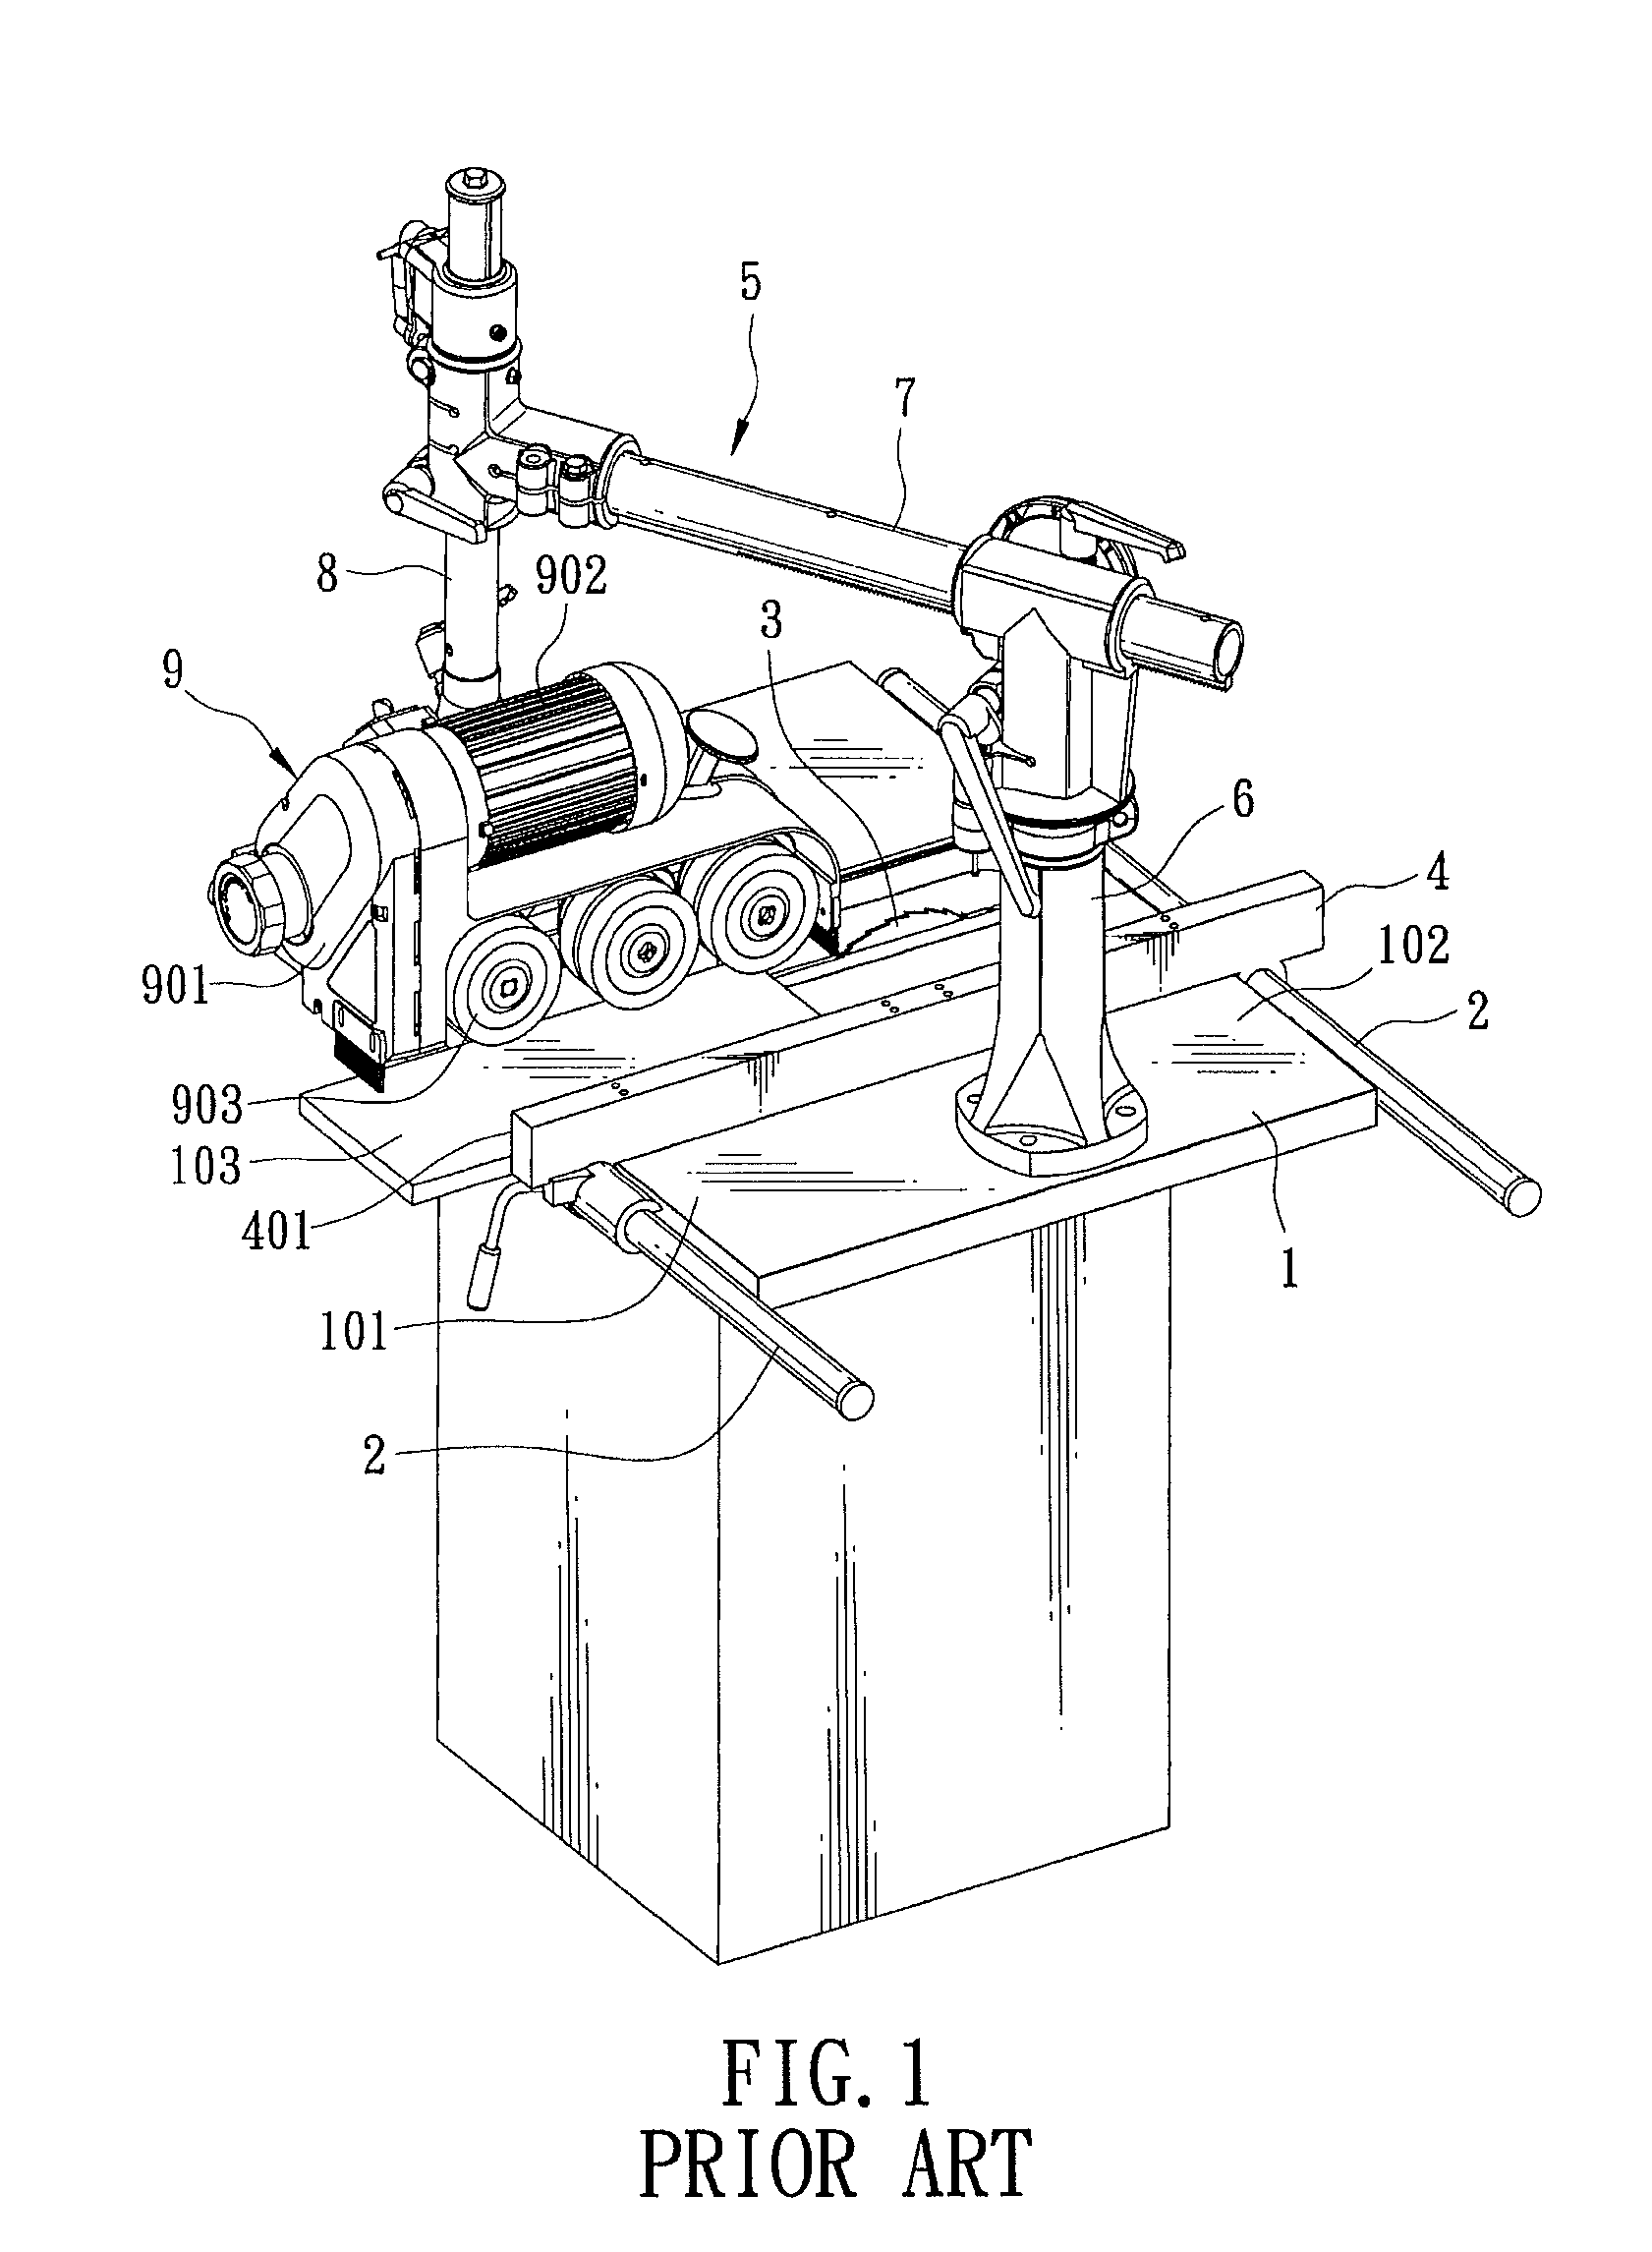 Feeding mechanism for a woodworking machine